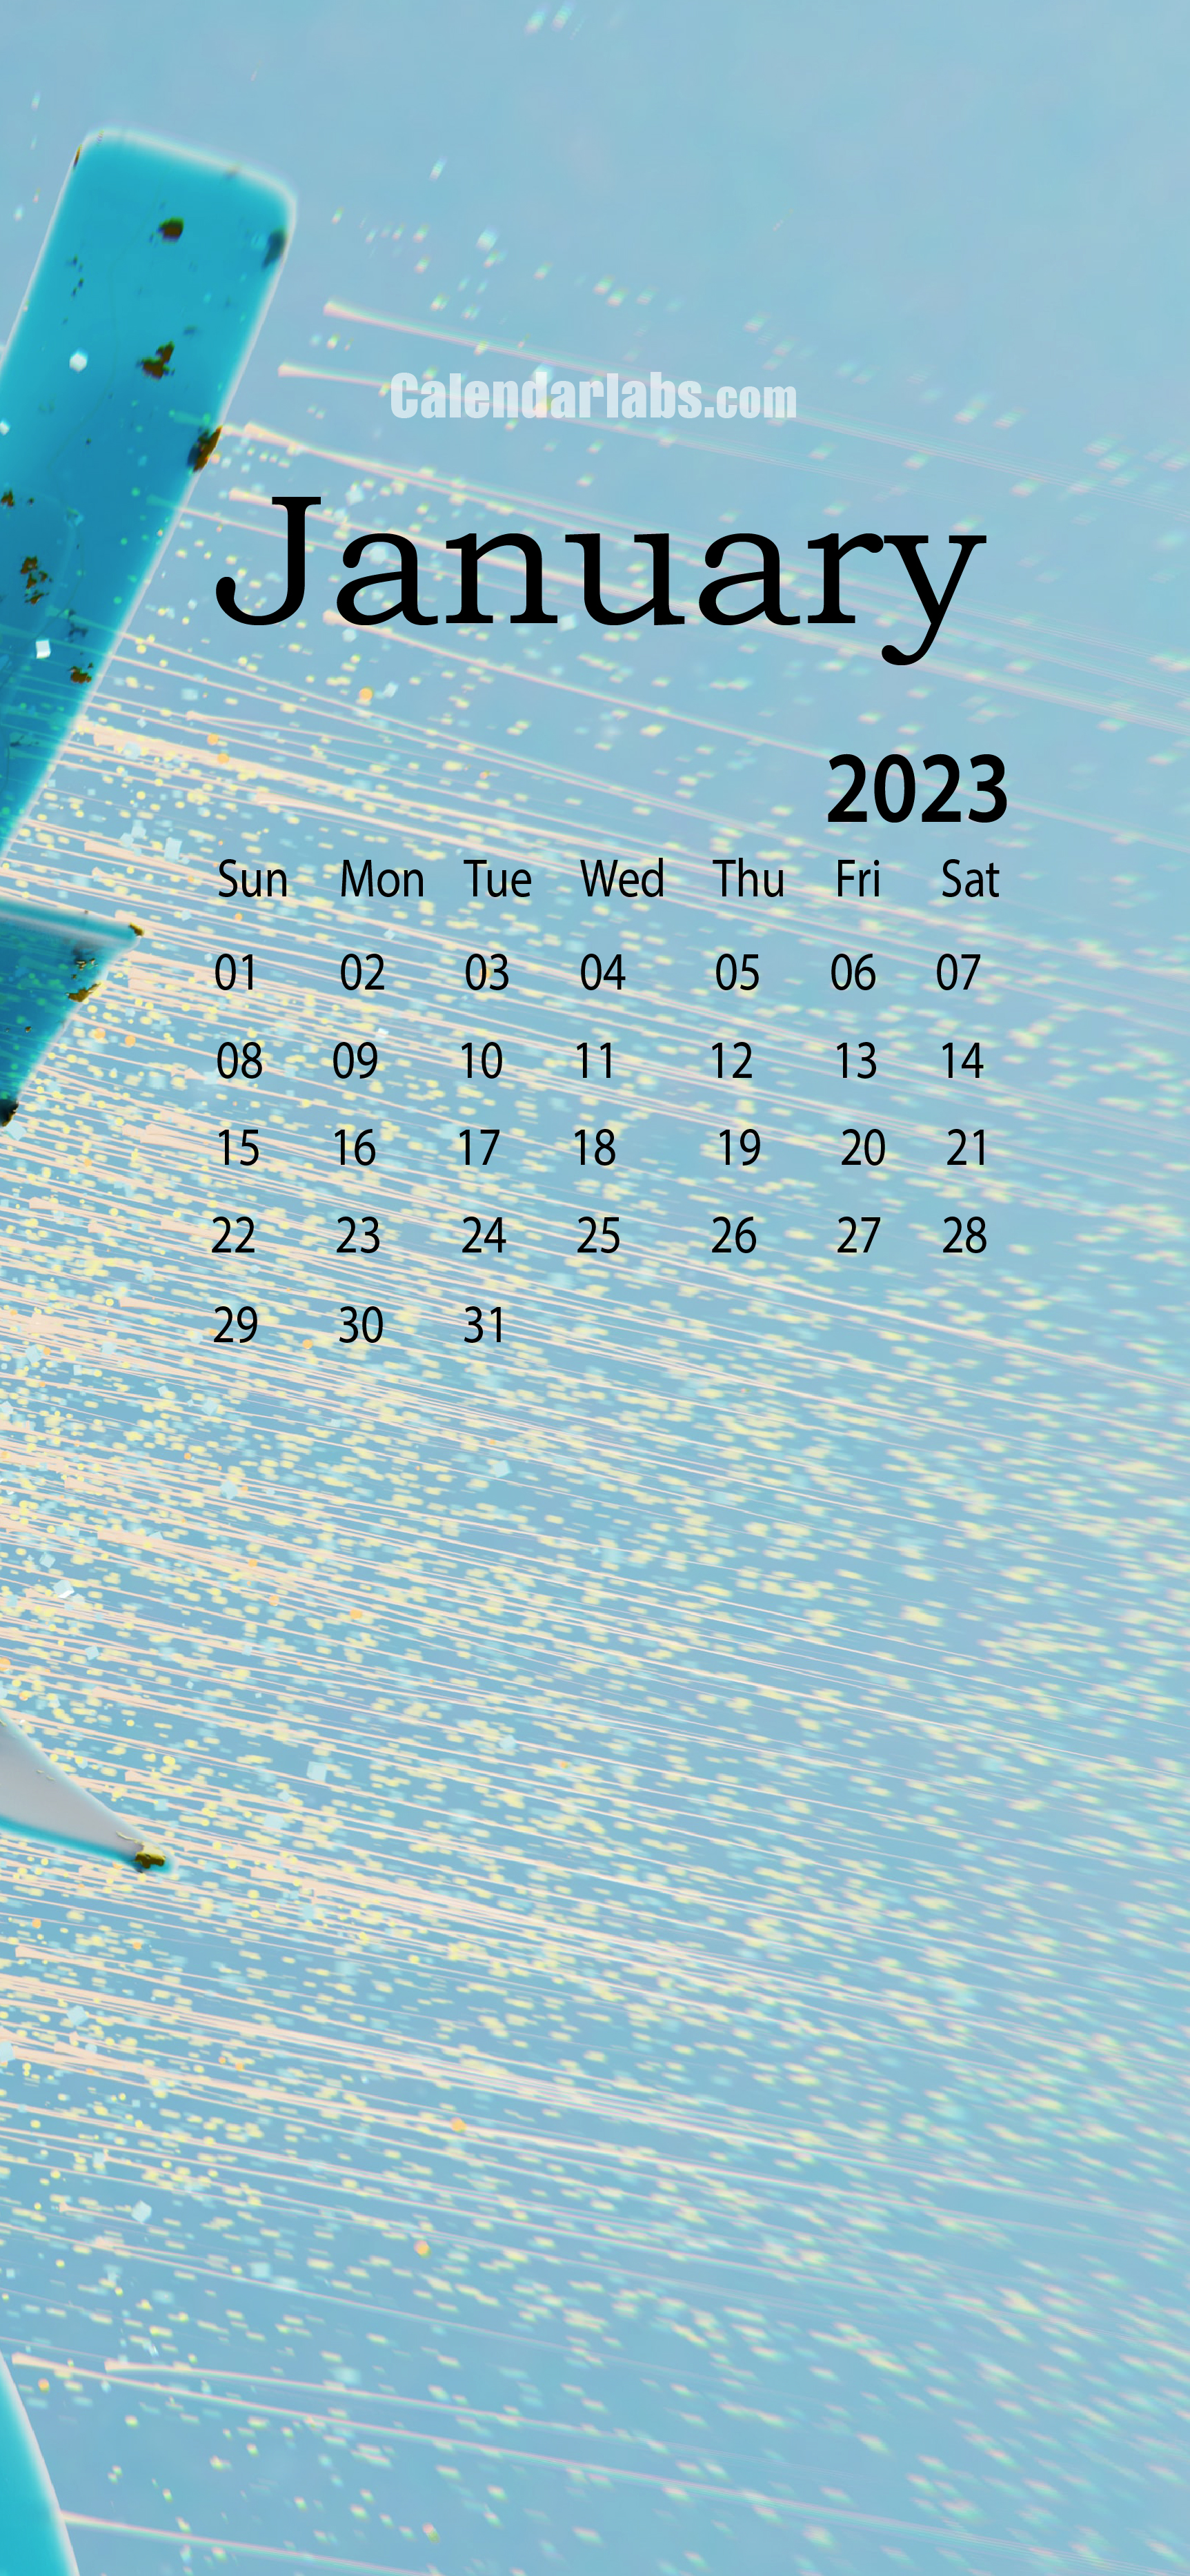 Phone Calendar 2023 Wallpapers - Wallpaper Cave